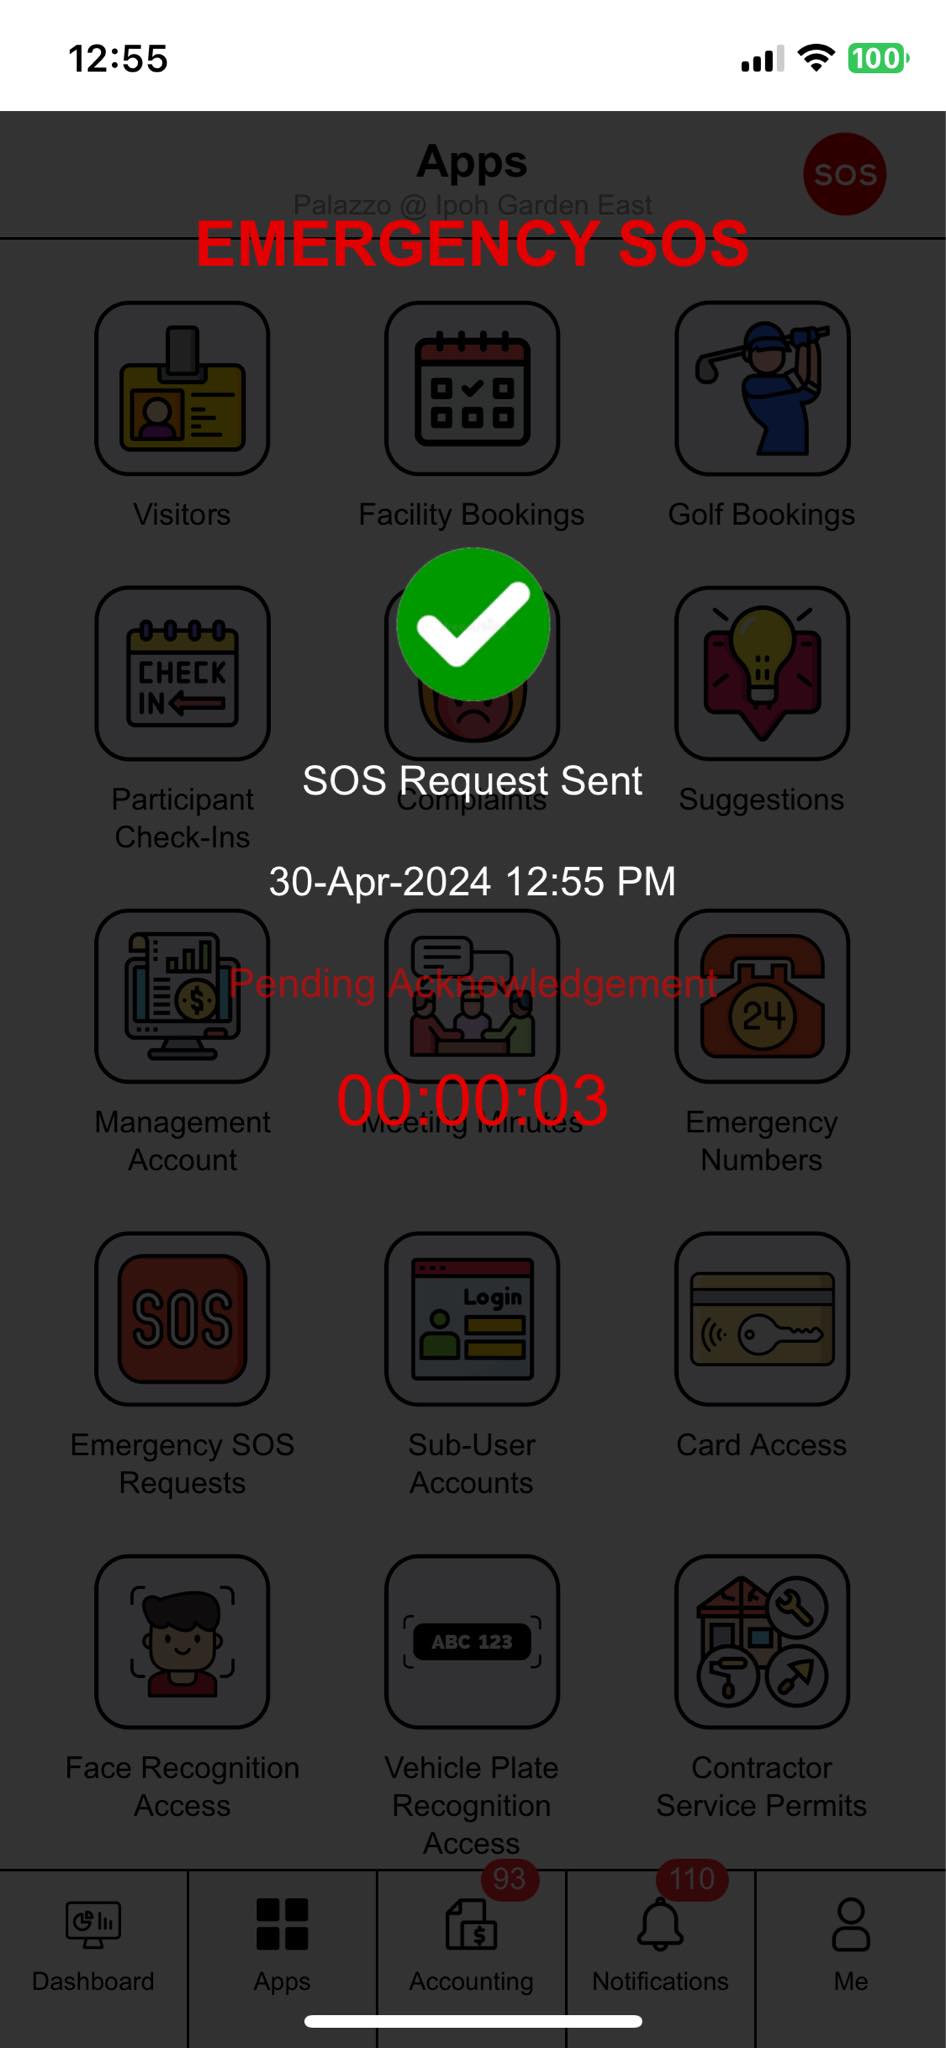 Emergency SOS Requests App Screenshot